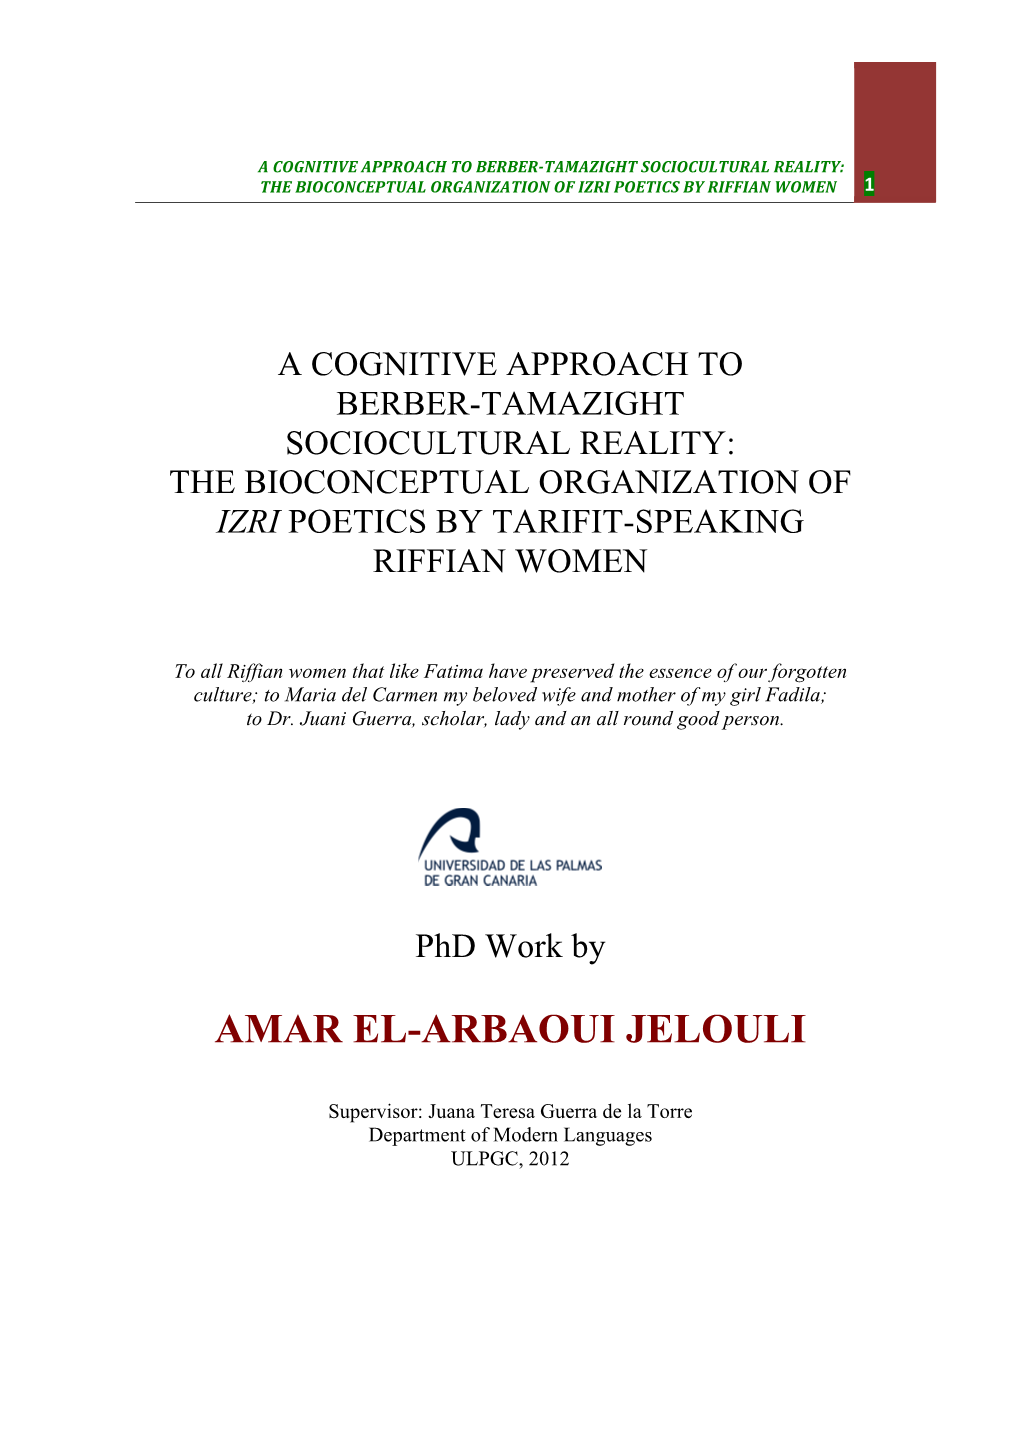 A Cognitive Approach to Berber-Tamazight Sociocultural Reality: the Bioconceptual Organization of Izri Poetics by Tarifit-Speaking Riffian Women